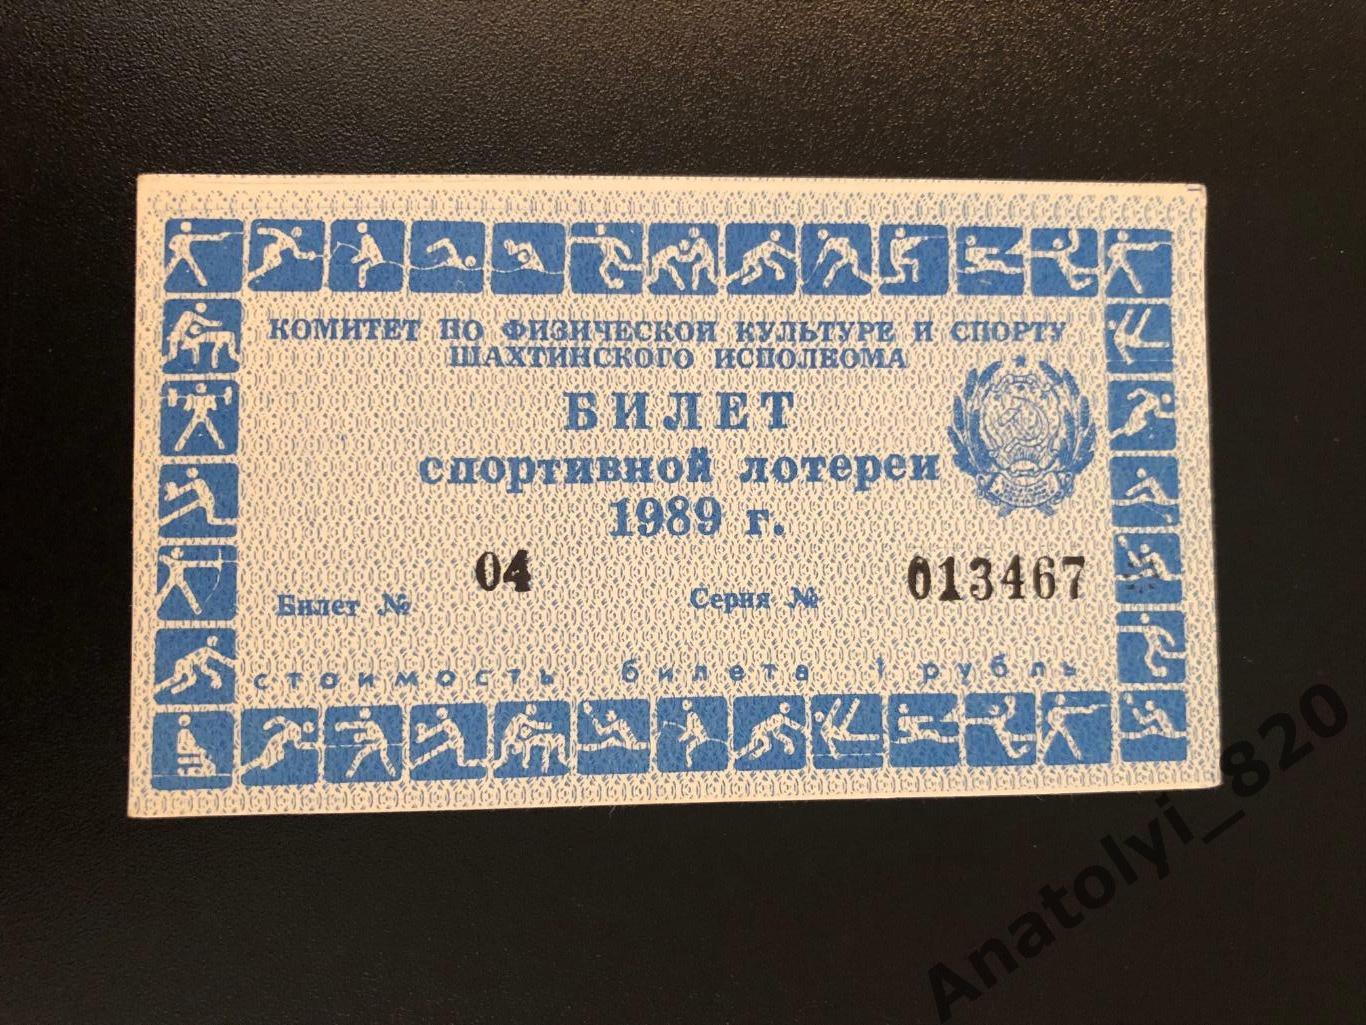 Билет спортивной лотереи, г. Шахты 1989 год